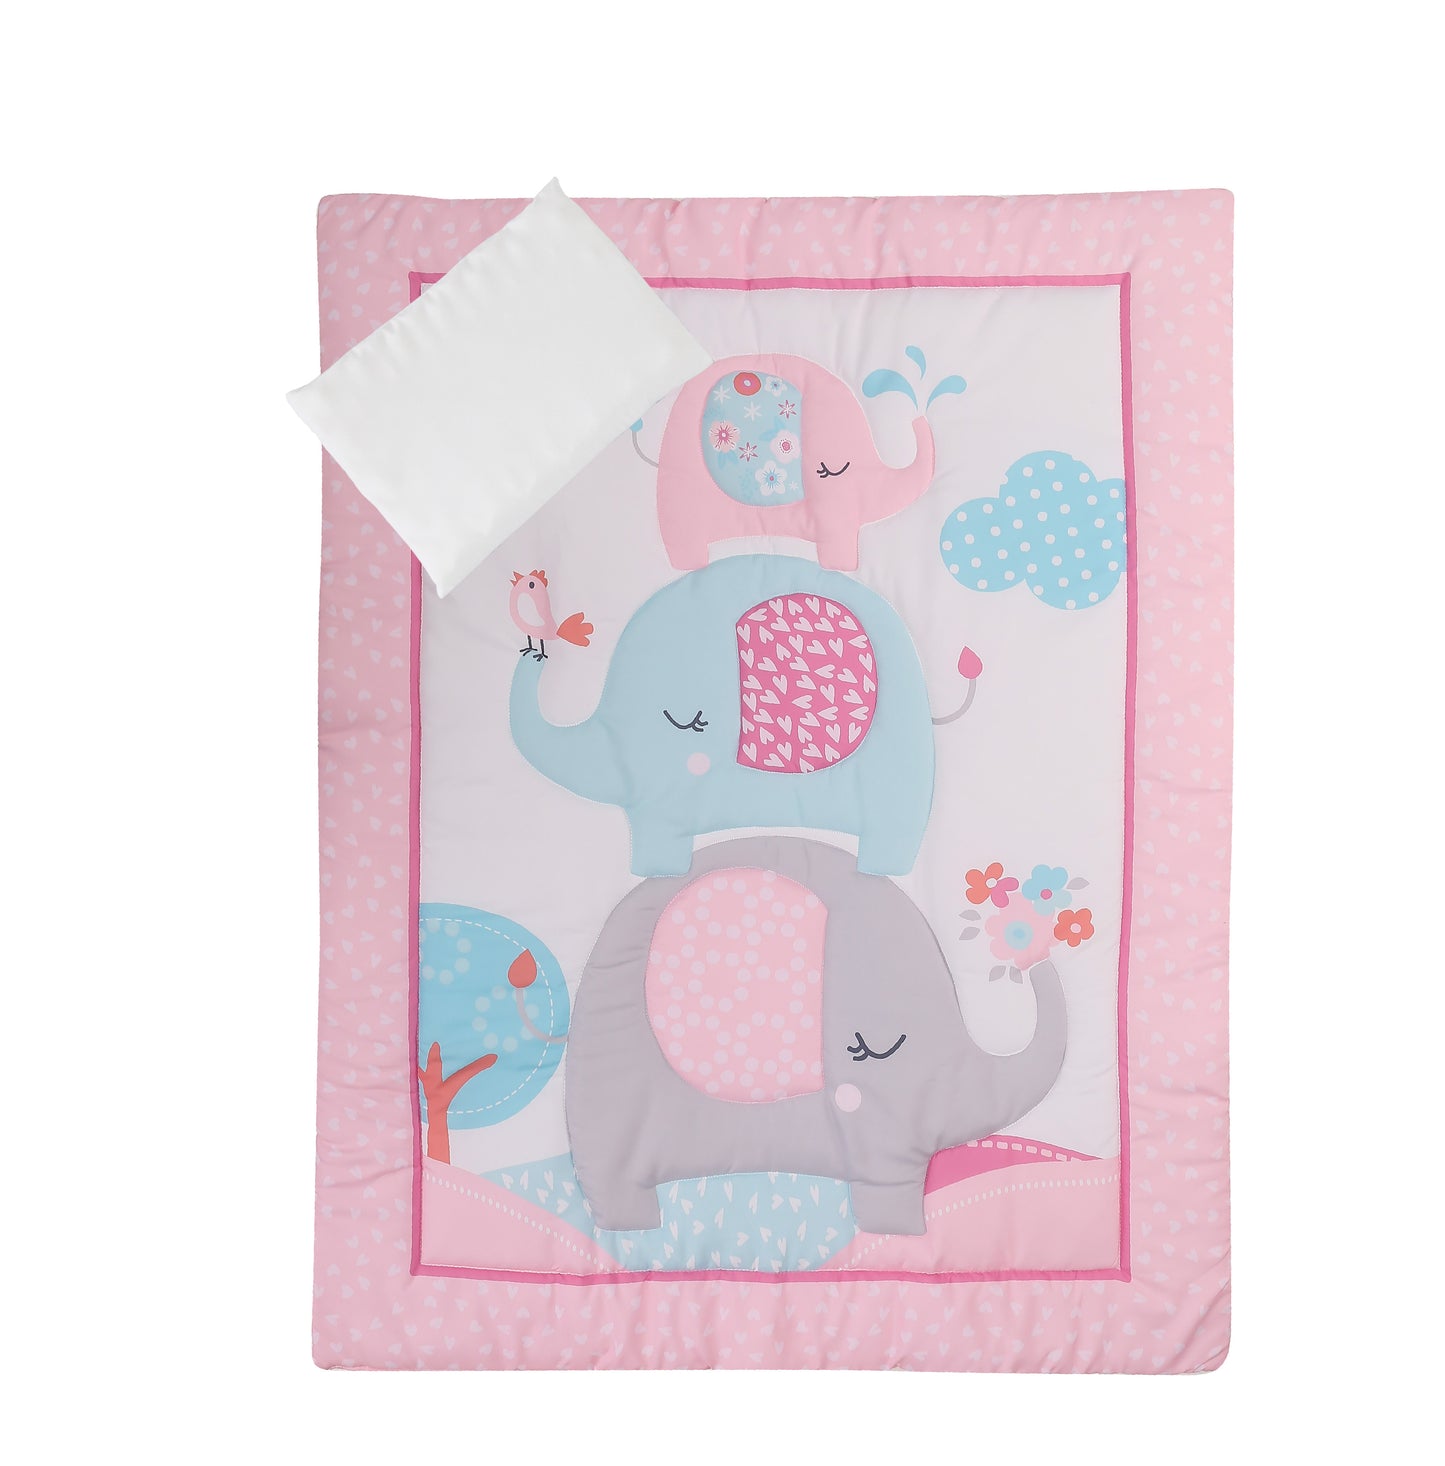 Snuggletime 3-Piece Quilt Set - Pink Elephant